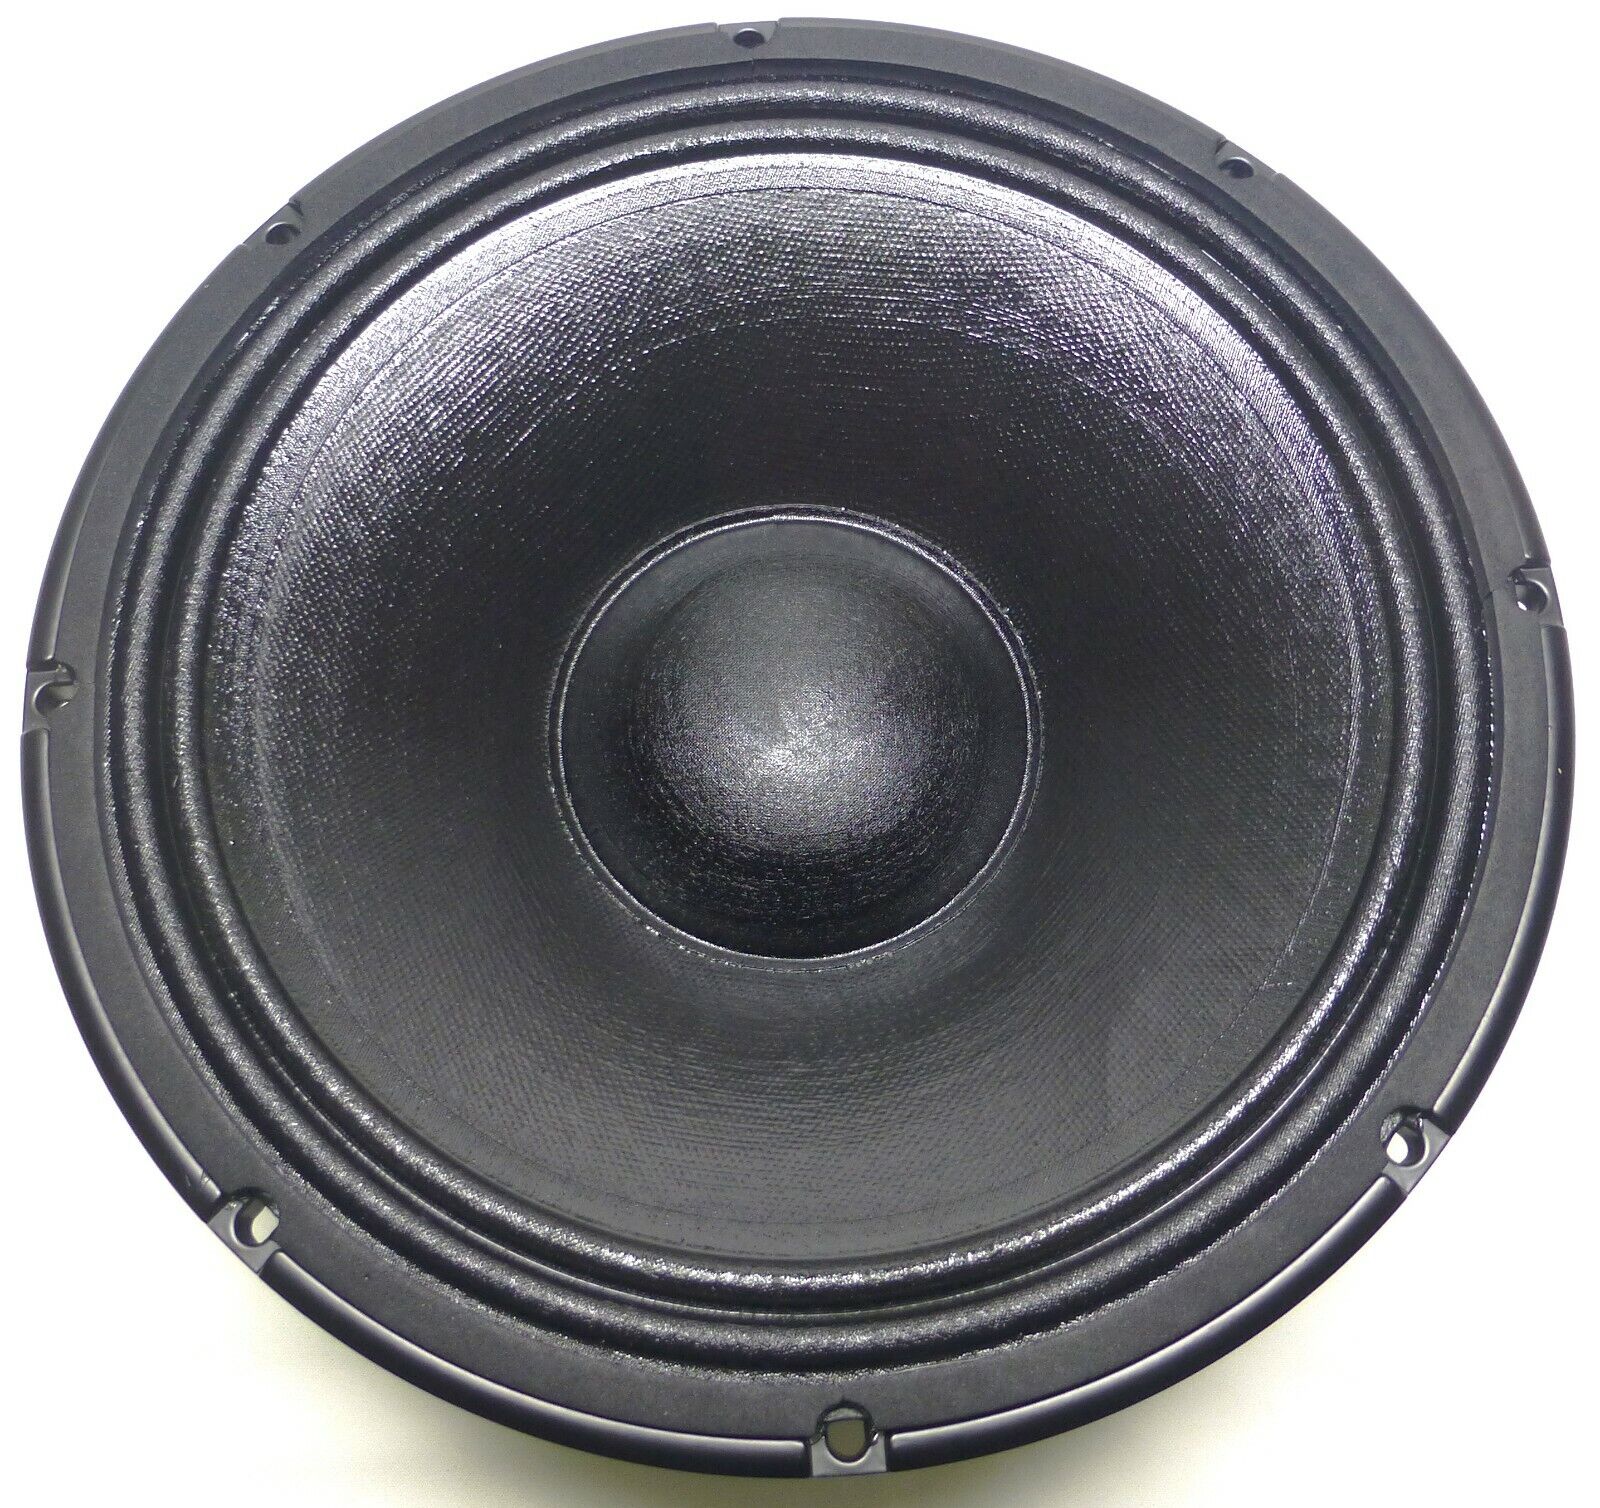 LASE 12MB1500 12" Bass / Mid-bass Speaker